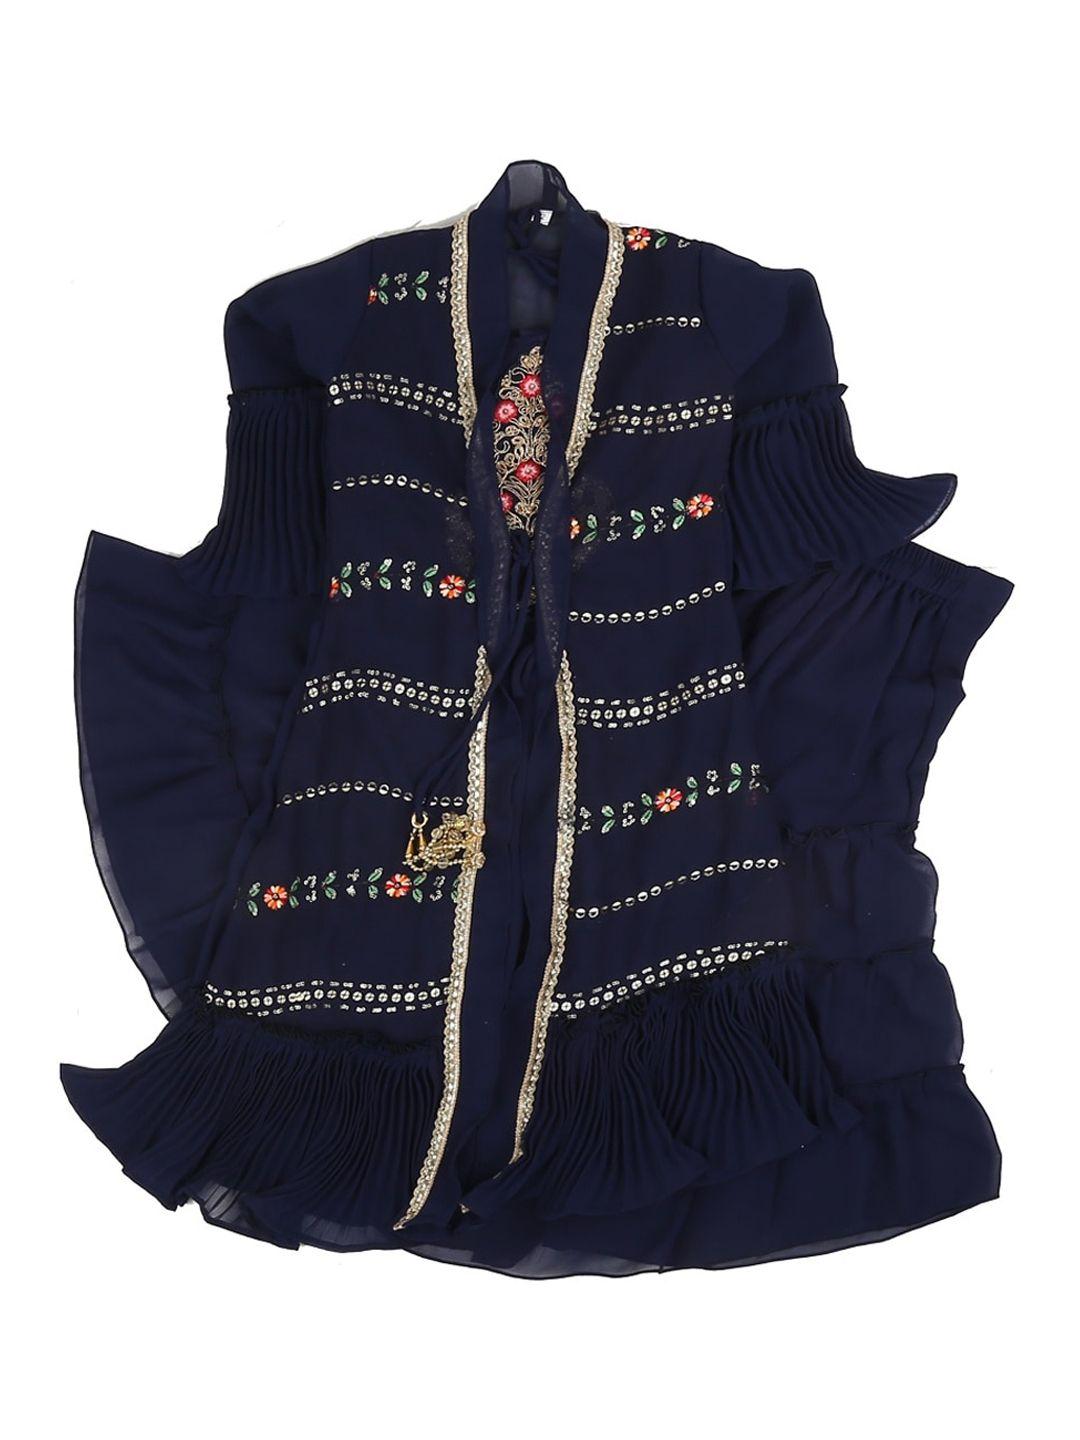 v-mart boys navy blue ethnic motifs embroidered pure cotton kurta with sharara